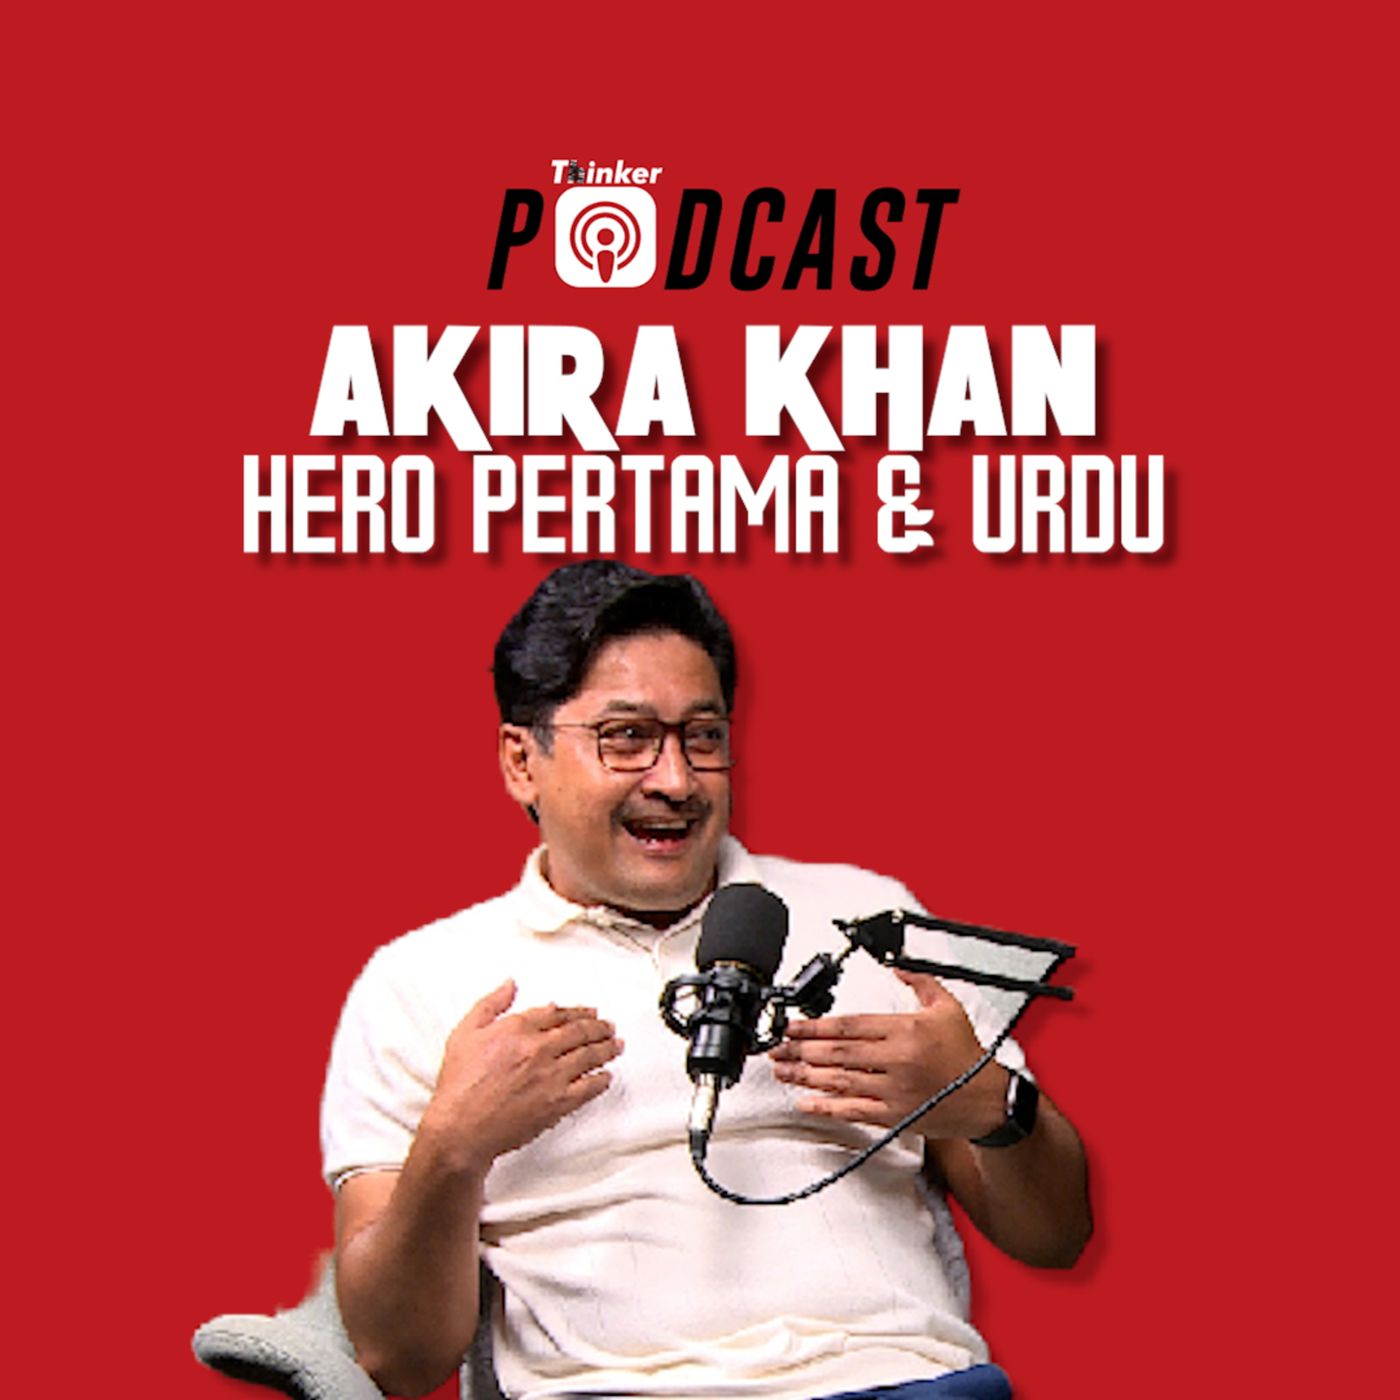 AKIRA KHAN - Hero Pertama & Urdu